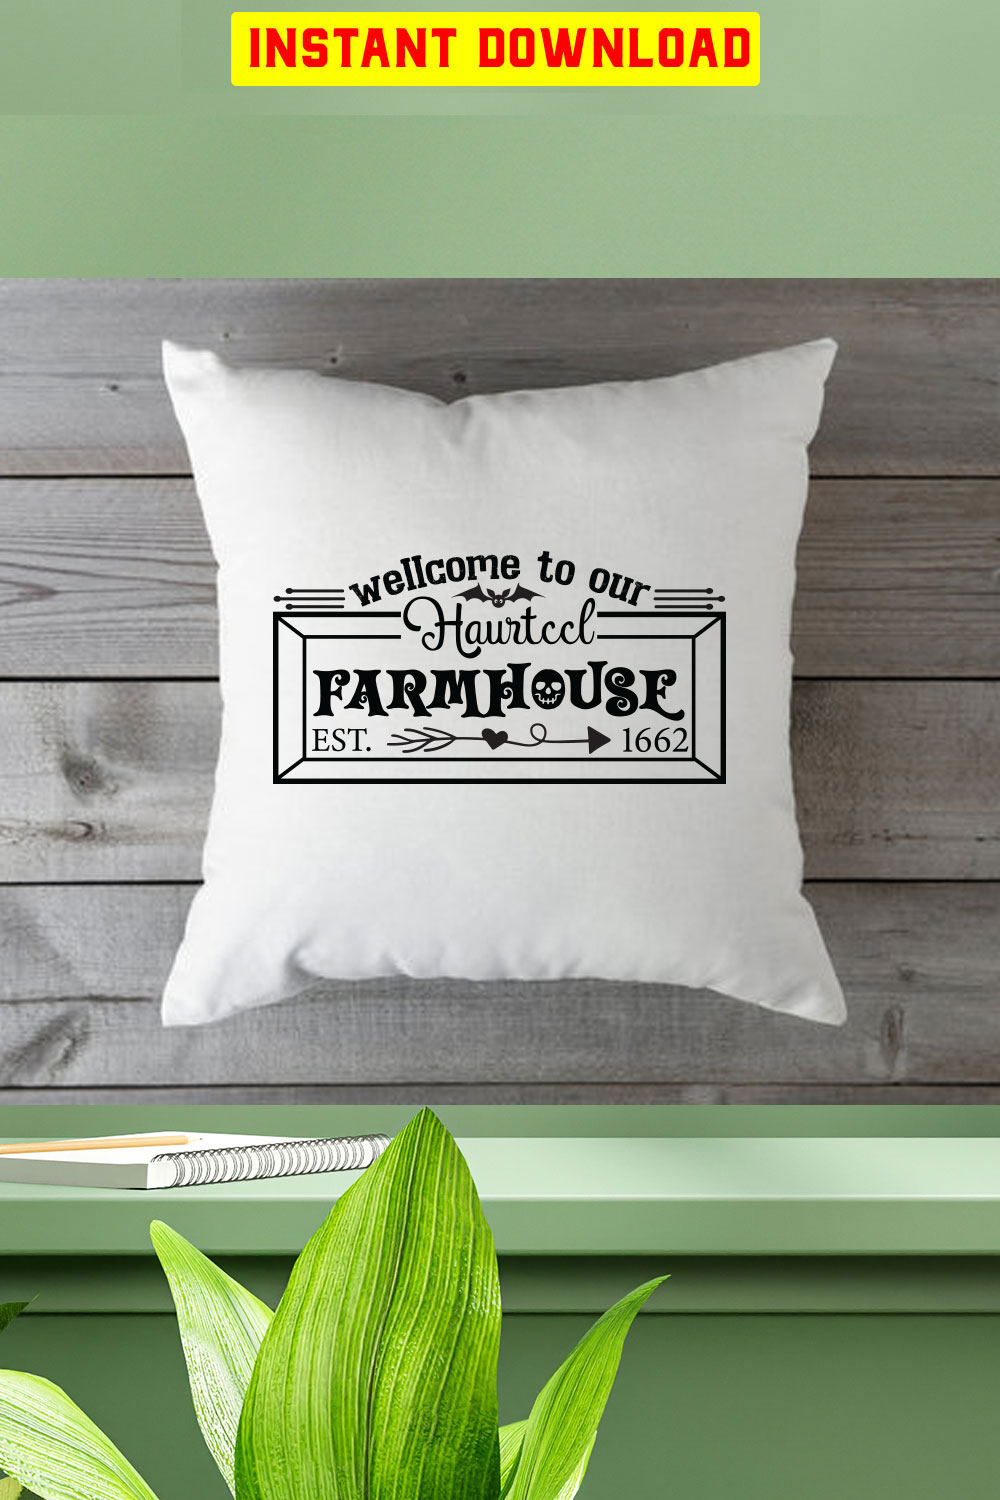 Wellcome To Our Haurtccl Farmhouse Est1662 pinterest preview image.